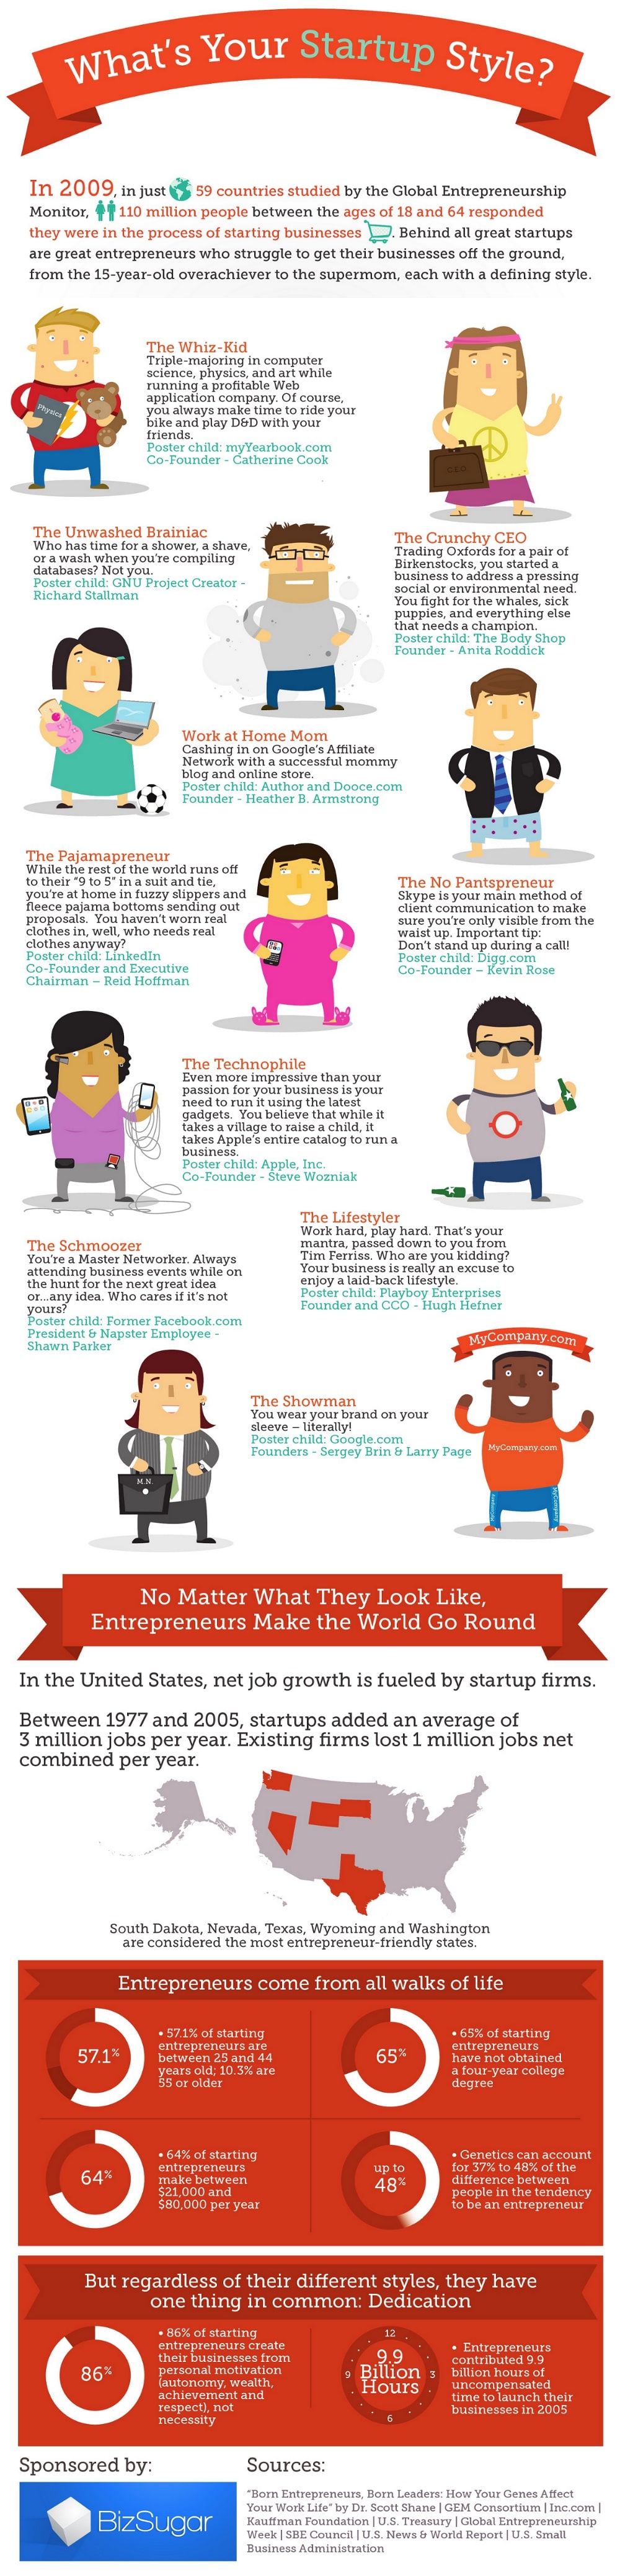 10-entrepreneurial-styles-list-infographic